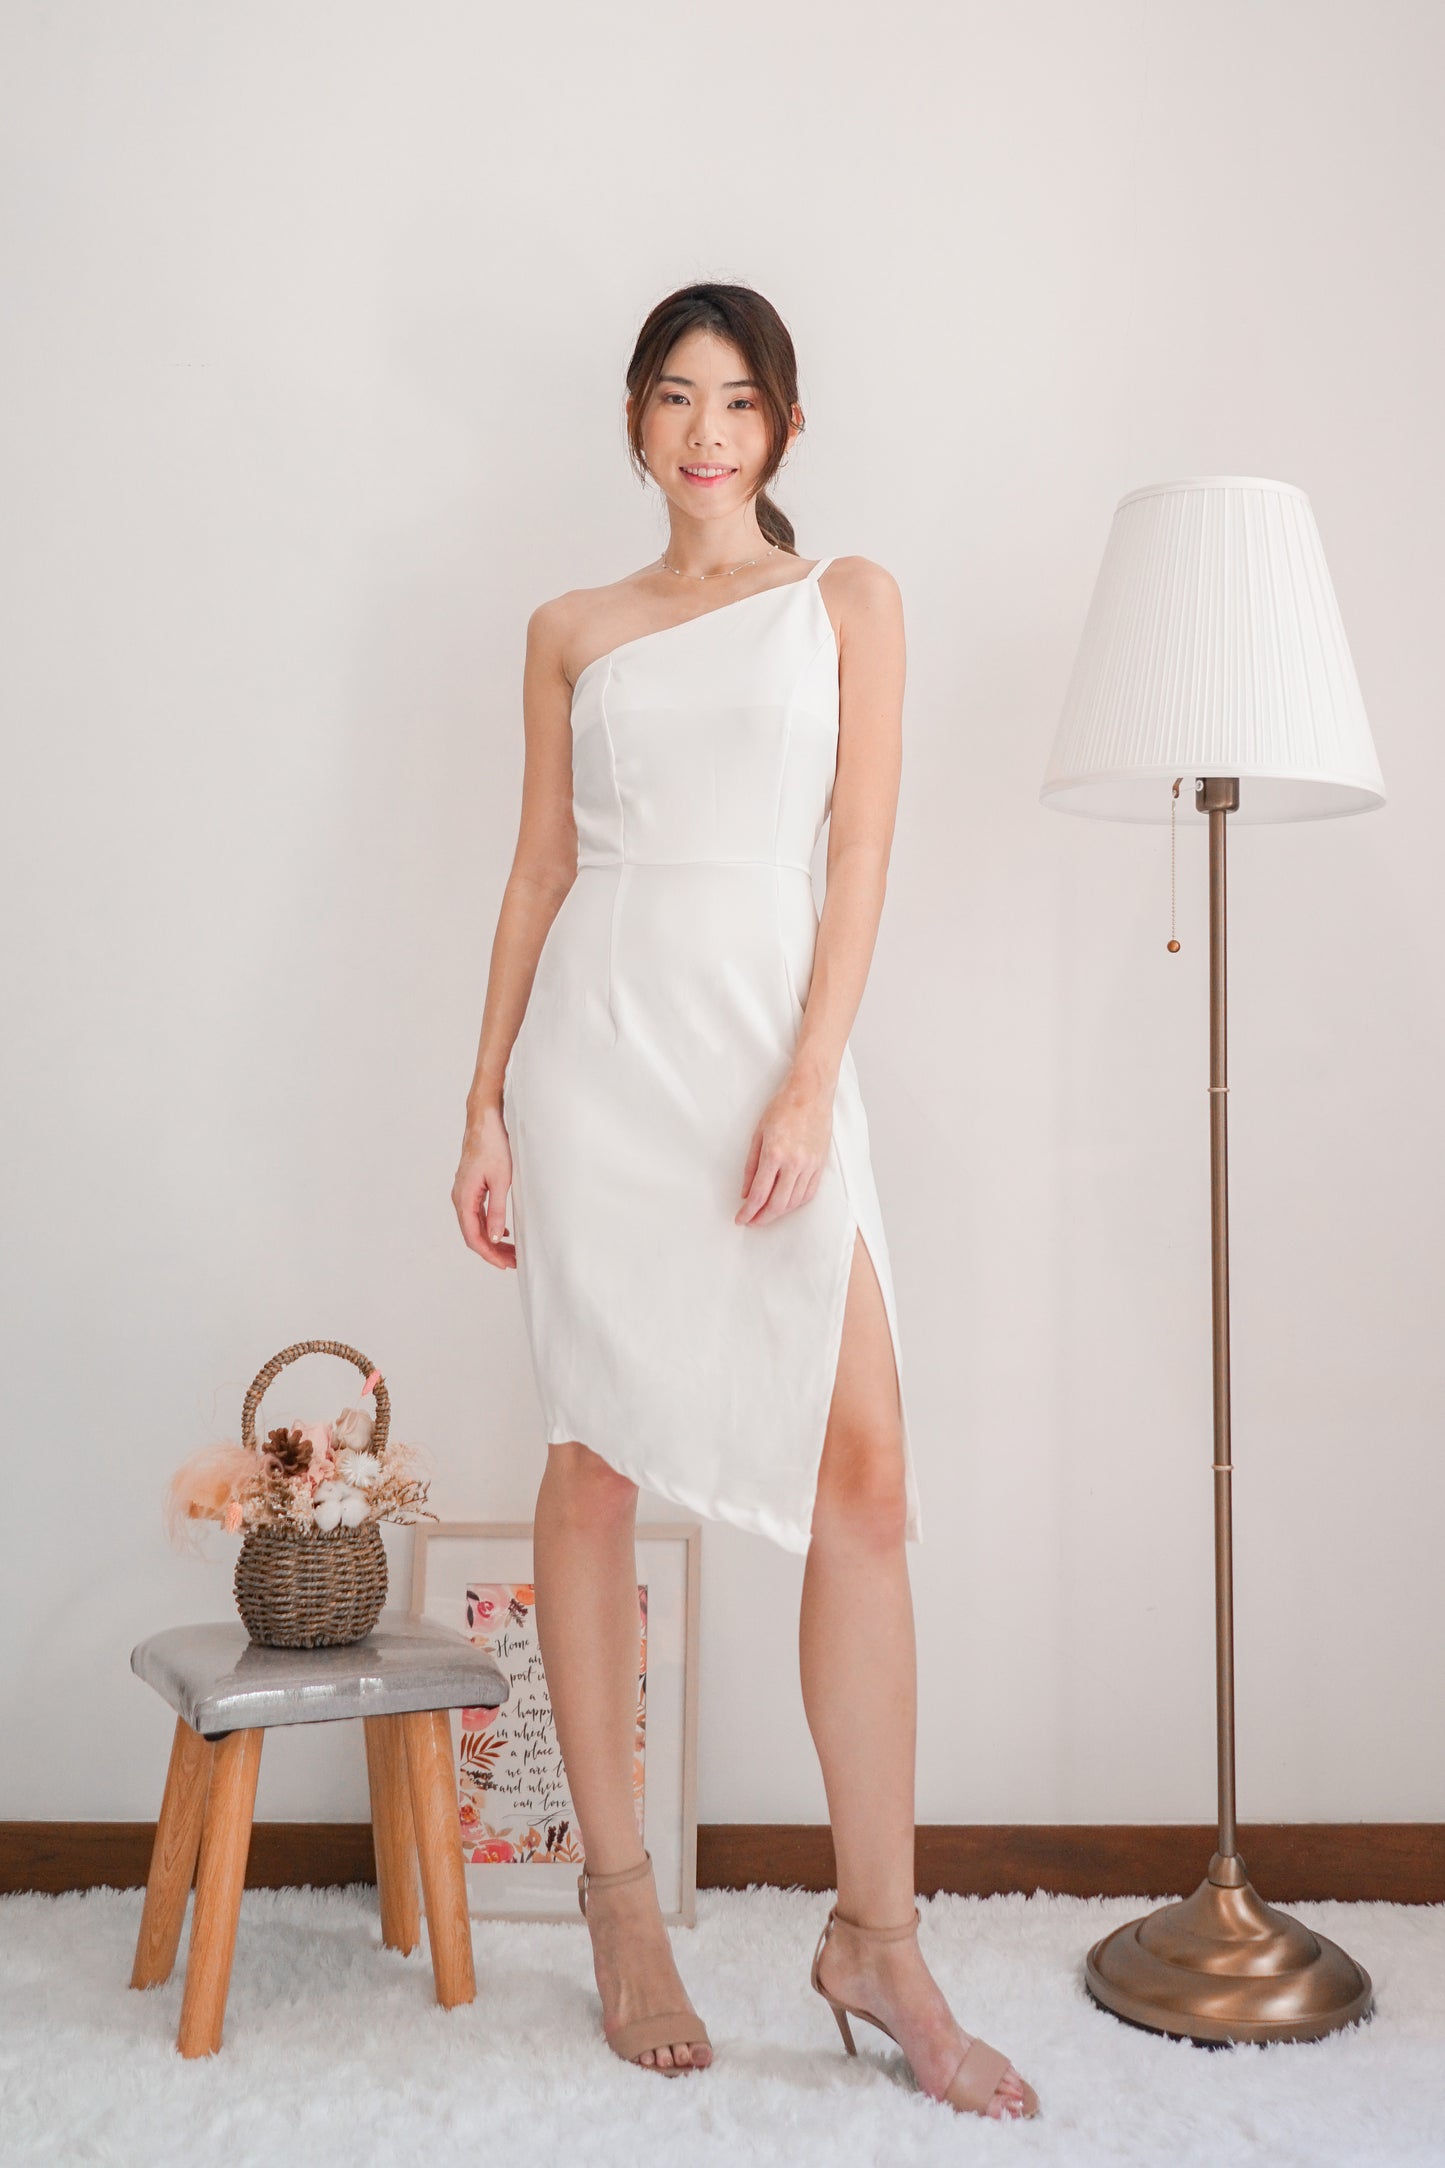 *PREMIUM* - Tayilia Toga Dress in White - Self Manufactured by LBRLABEL